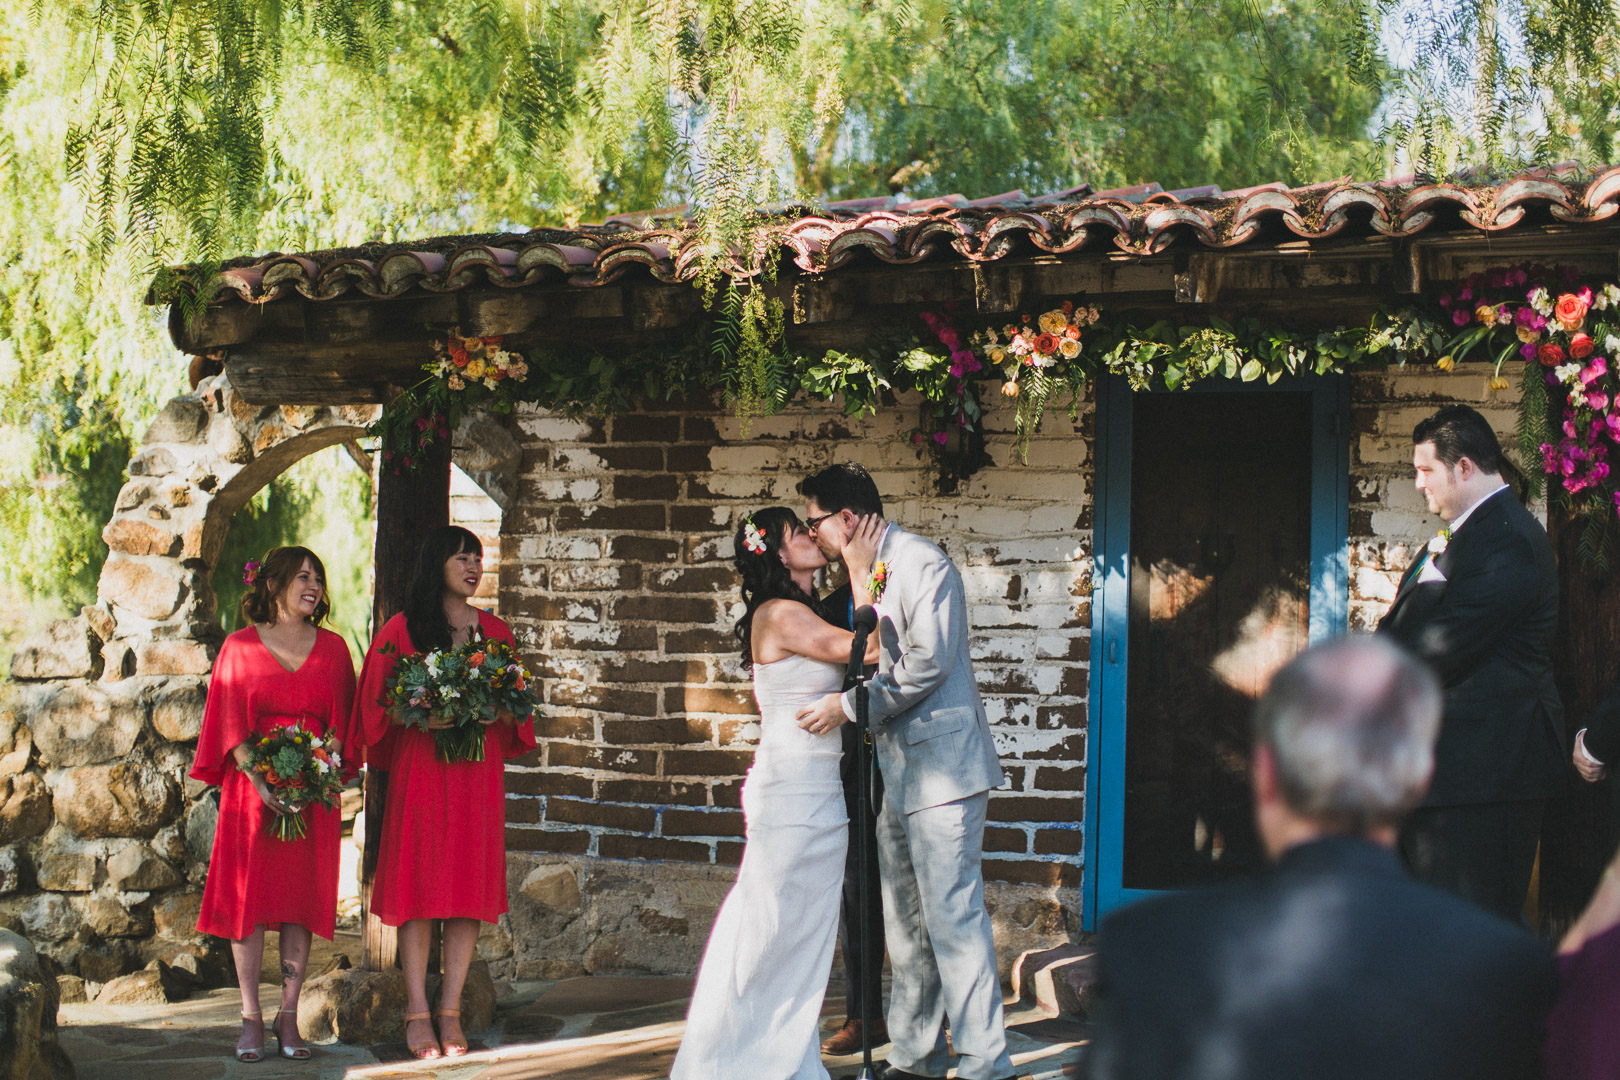 Leo Carrillo Ranch Weddings Rustic Southern California Venue